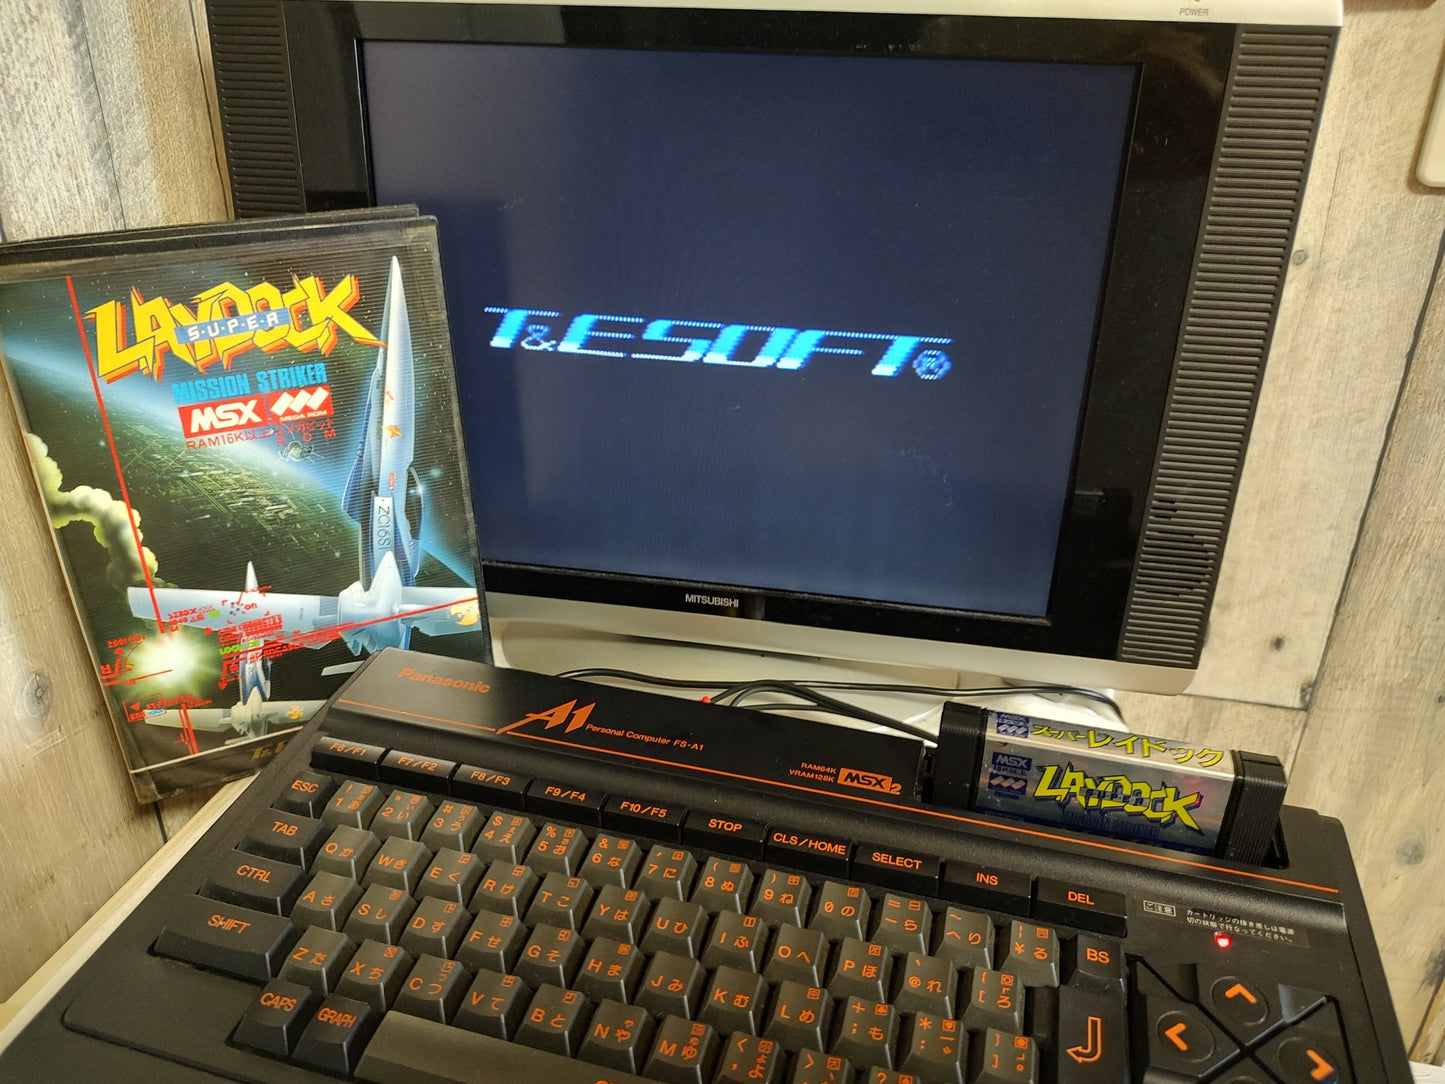 Super LAYDOCK Mission Striker MSX Game Cartridge, Manual, Box, Working-f0113-